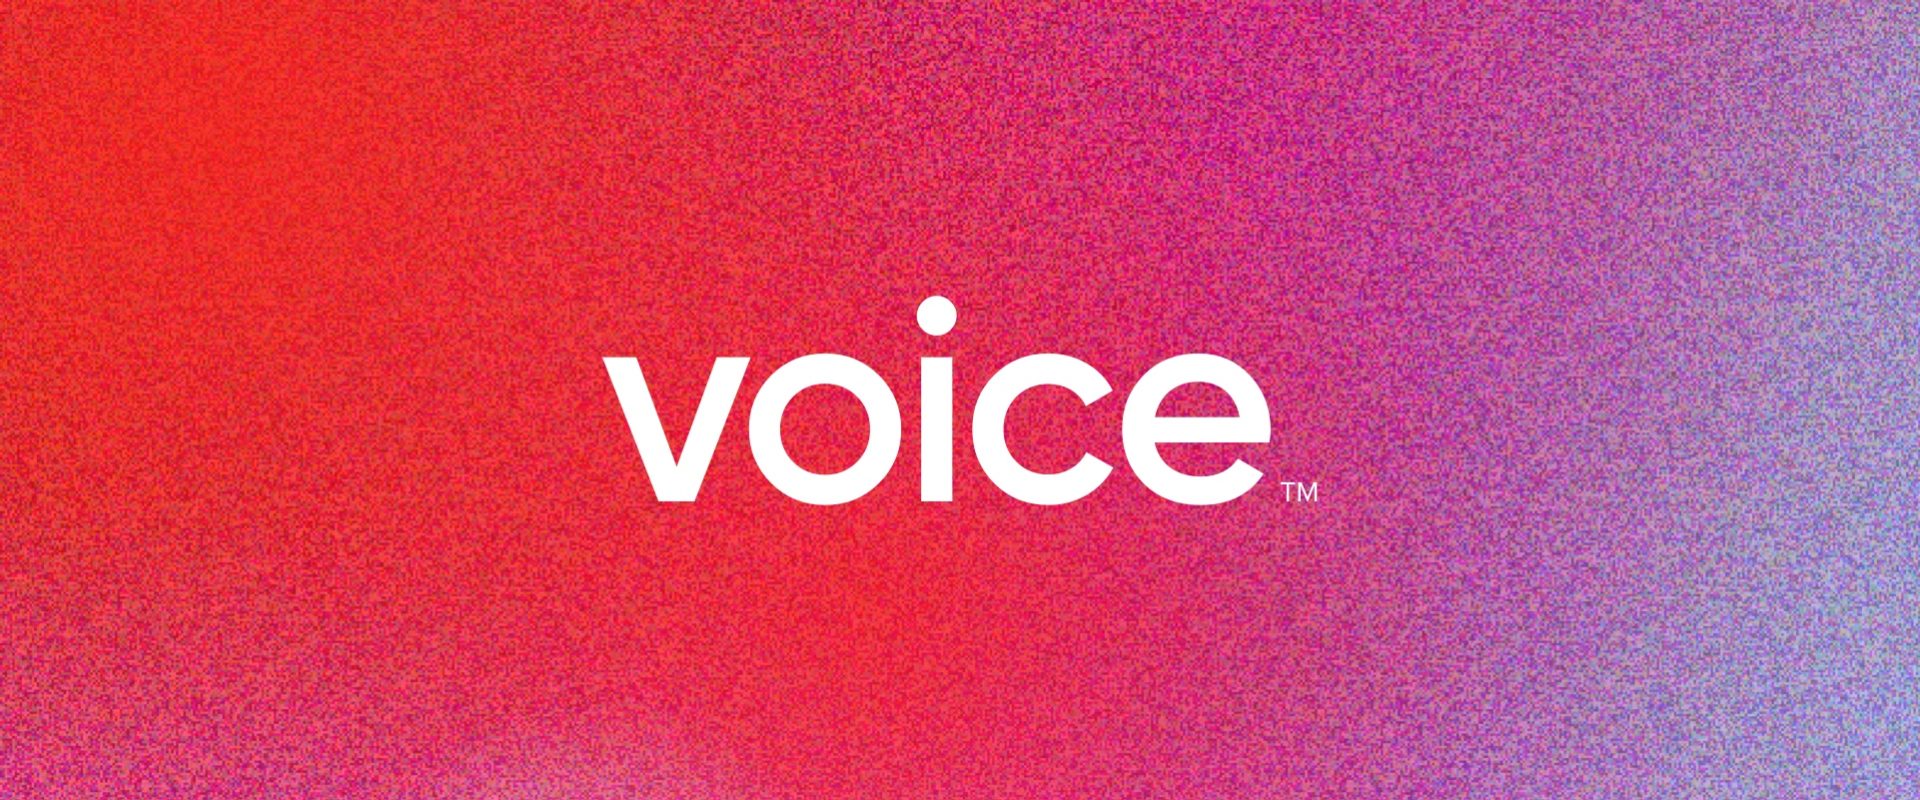 [EOS Inside] VOICE의 비하인드 스토리 : 법률 및 규제 문제